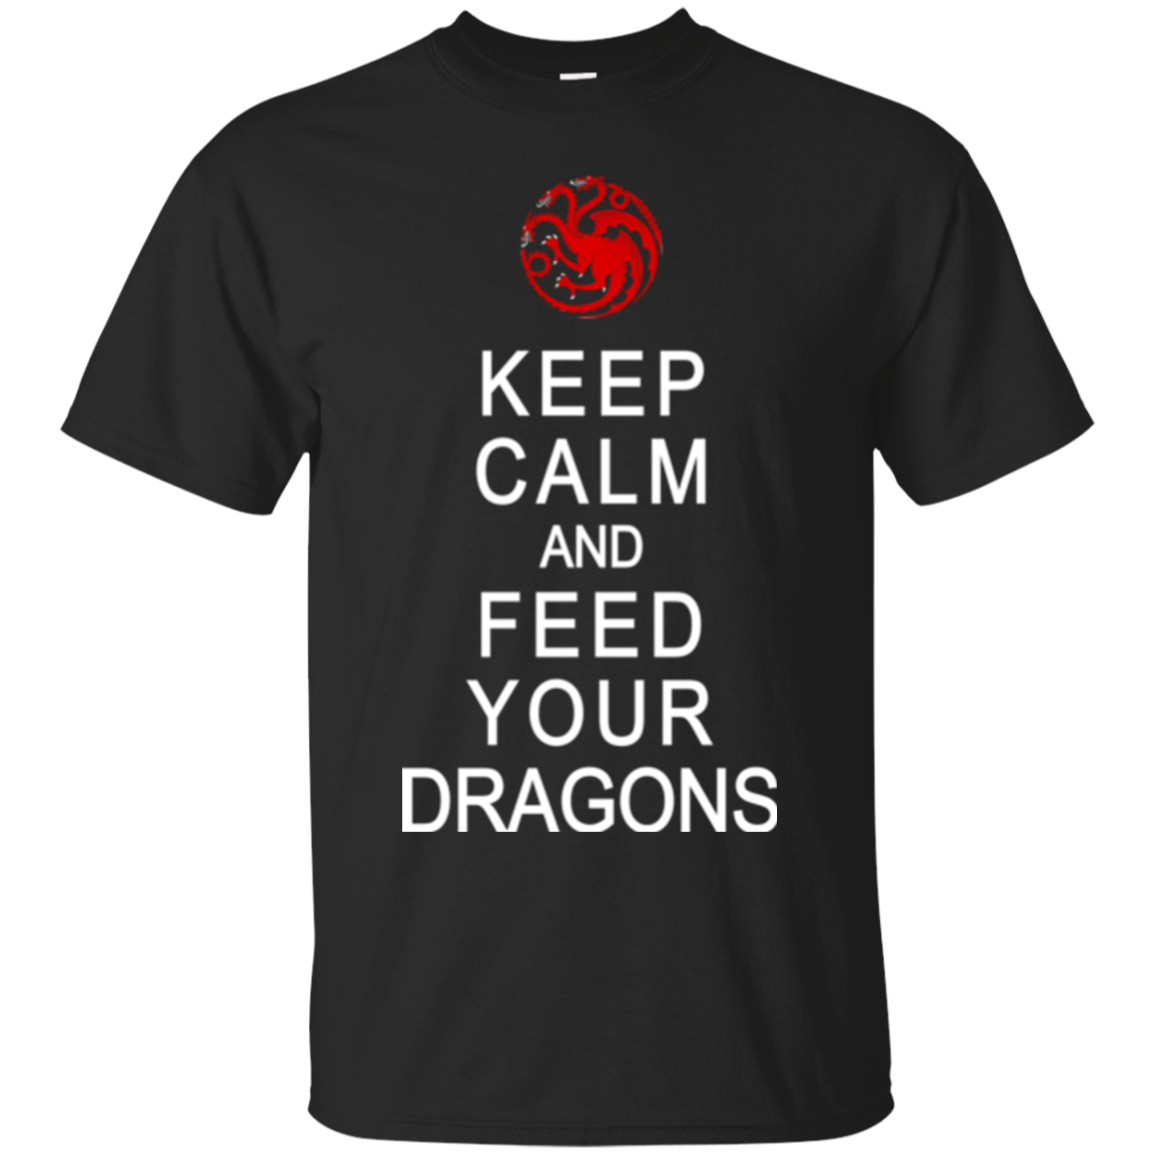 Feed dragons T-Shirt